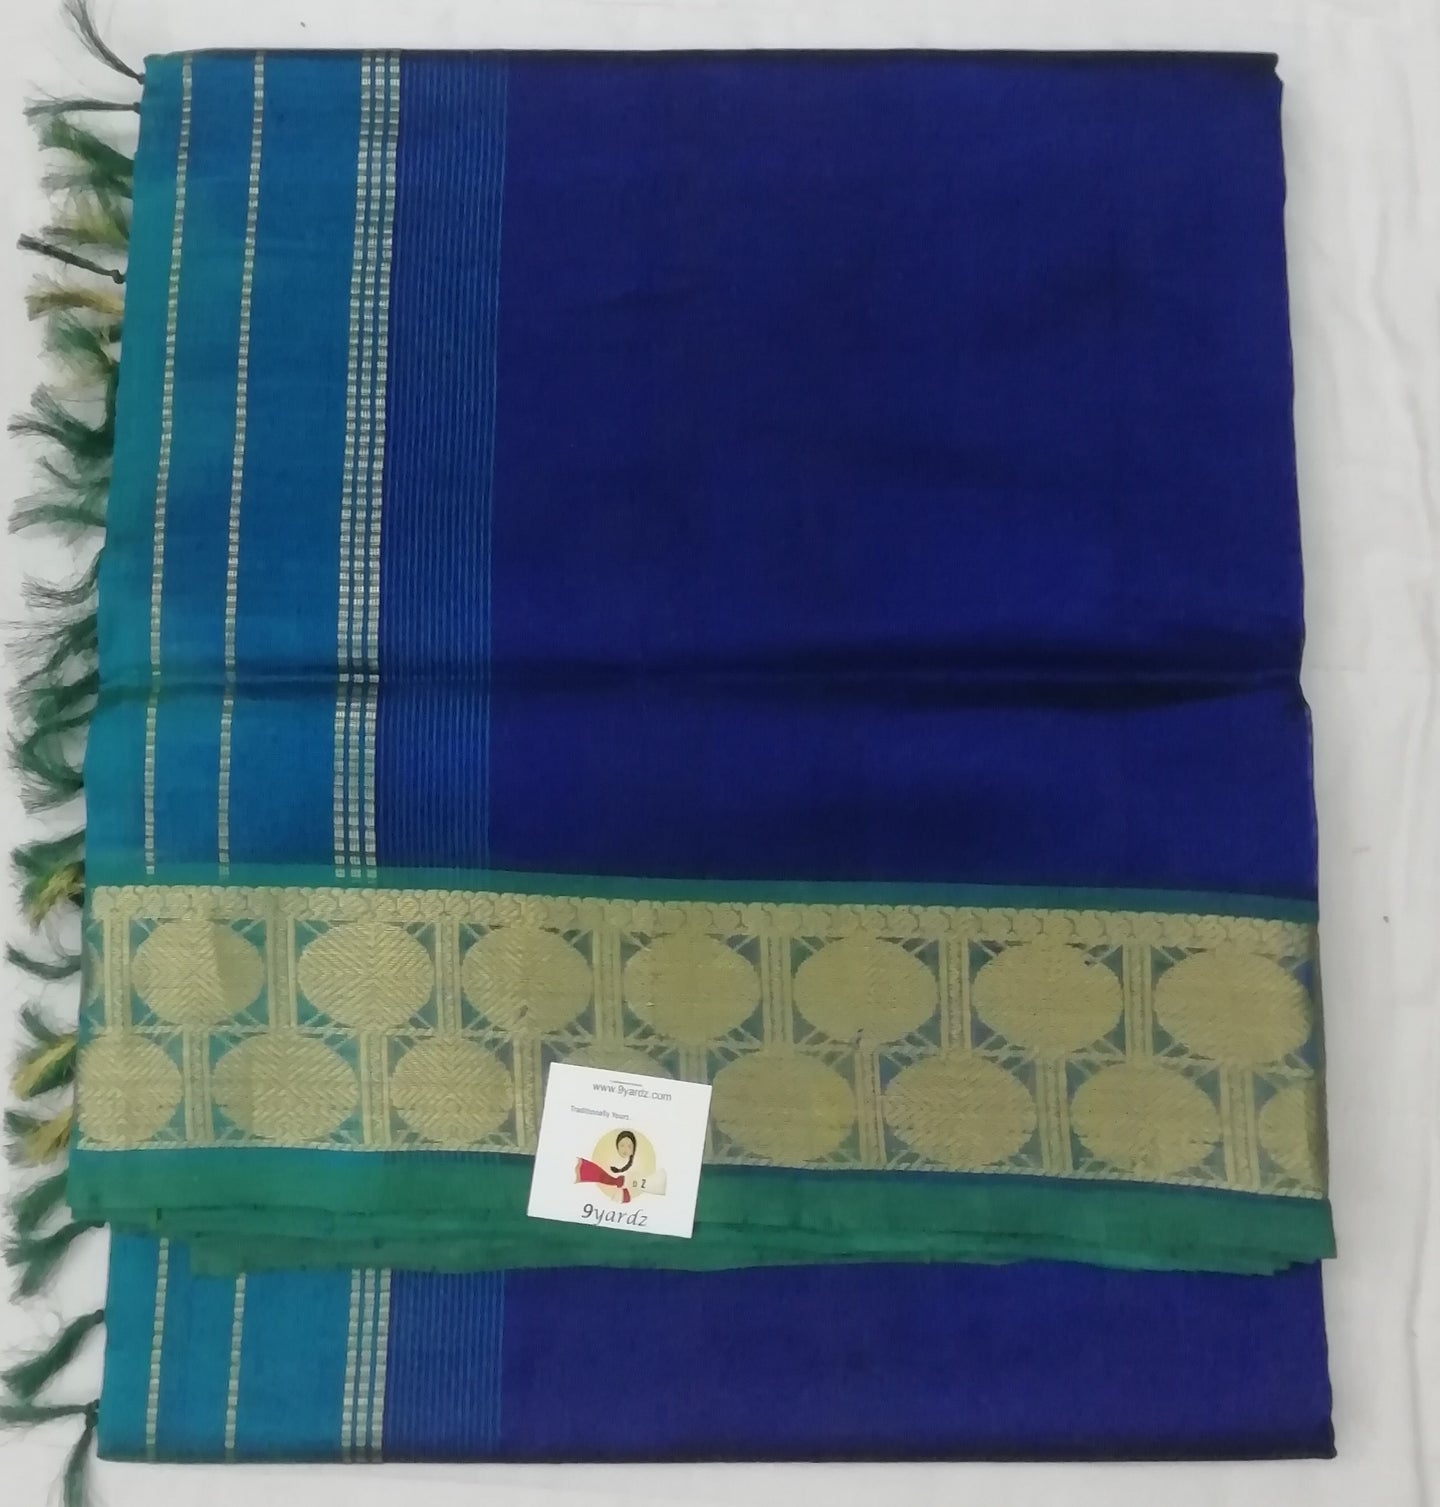 Pure Silk Cotton- Rudhraksha border